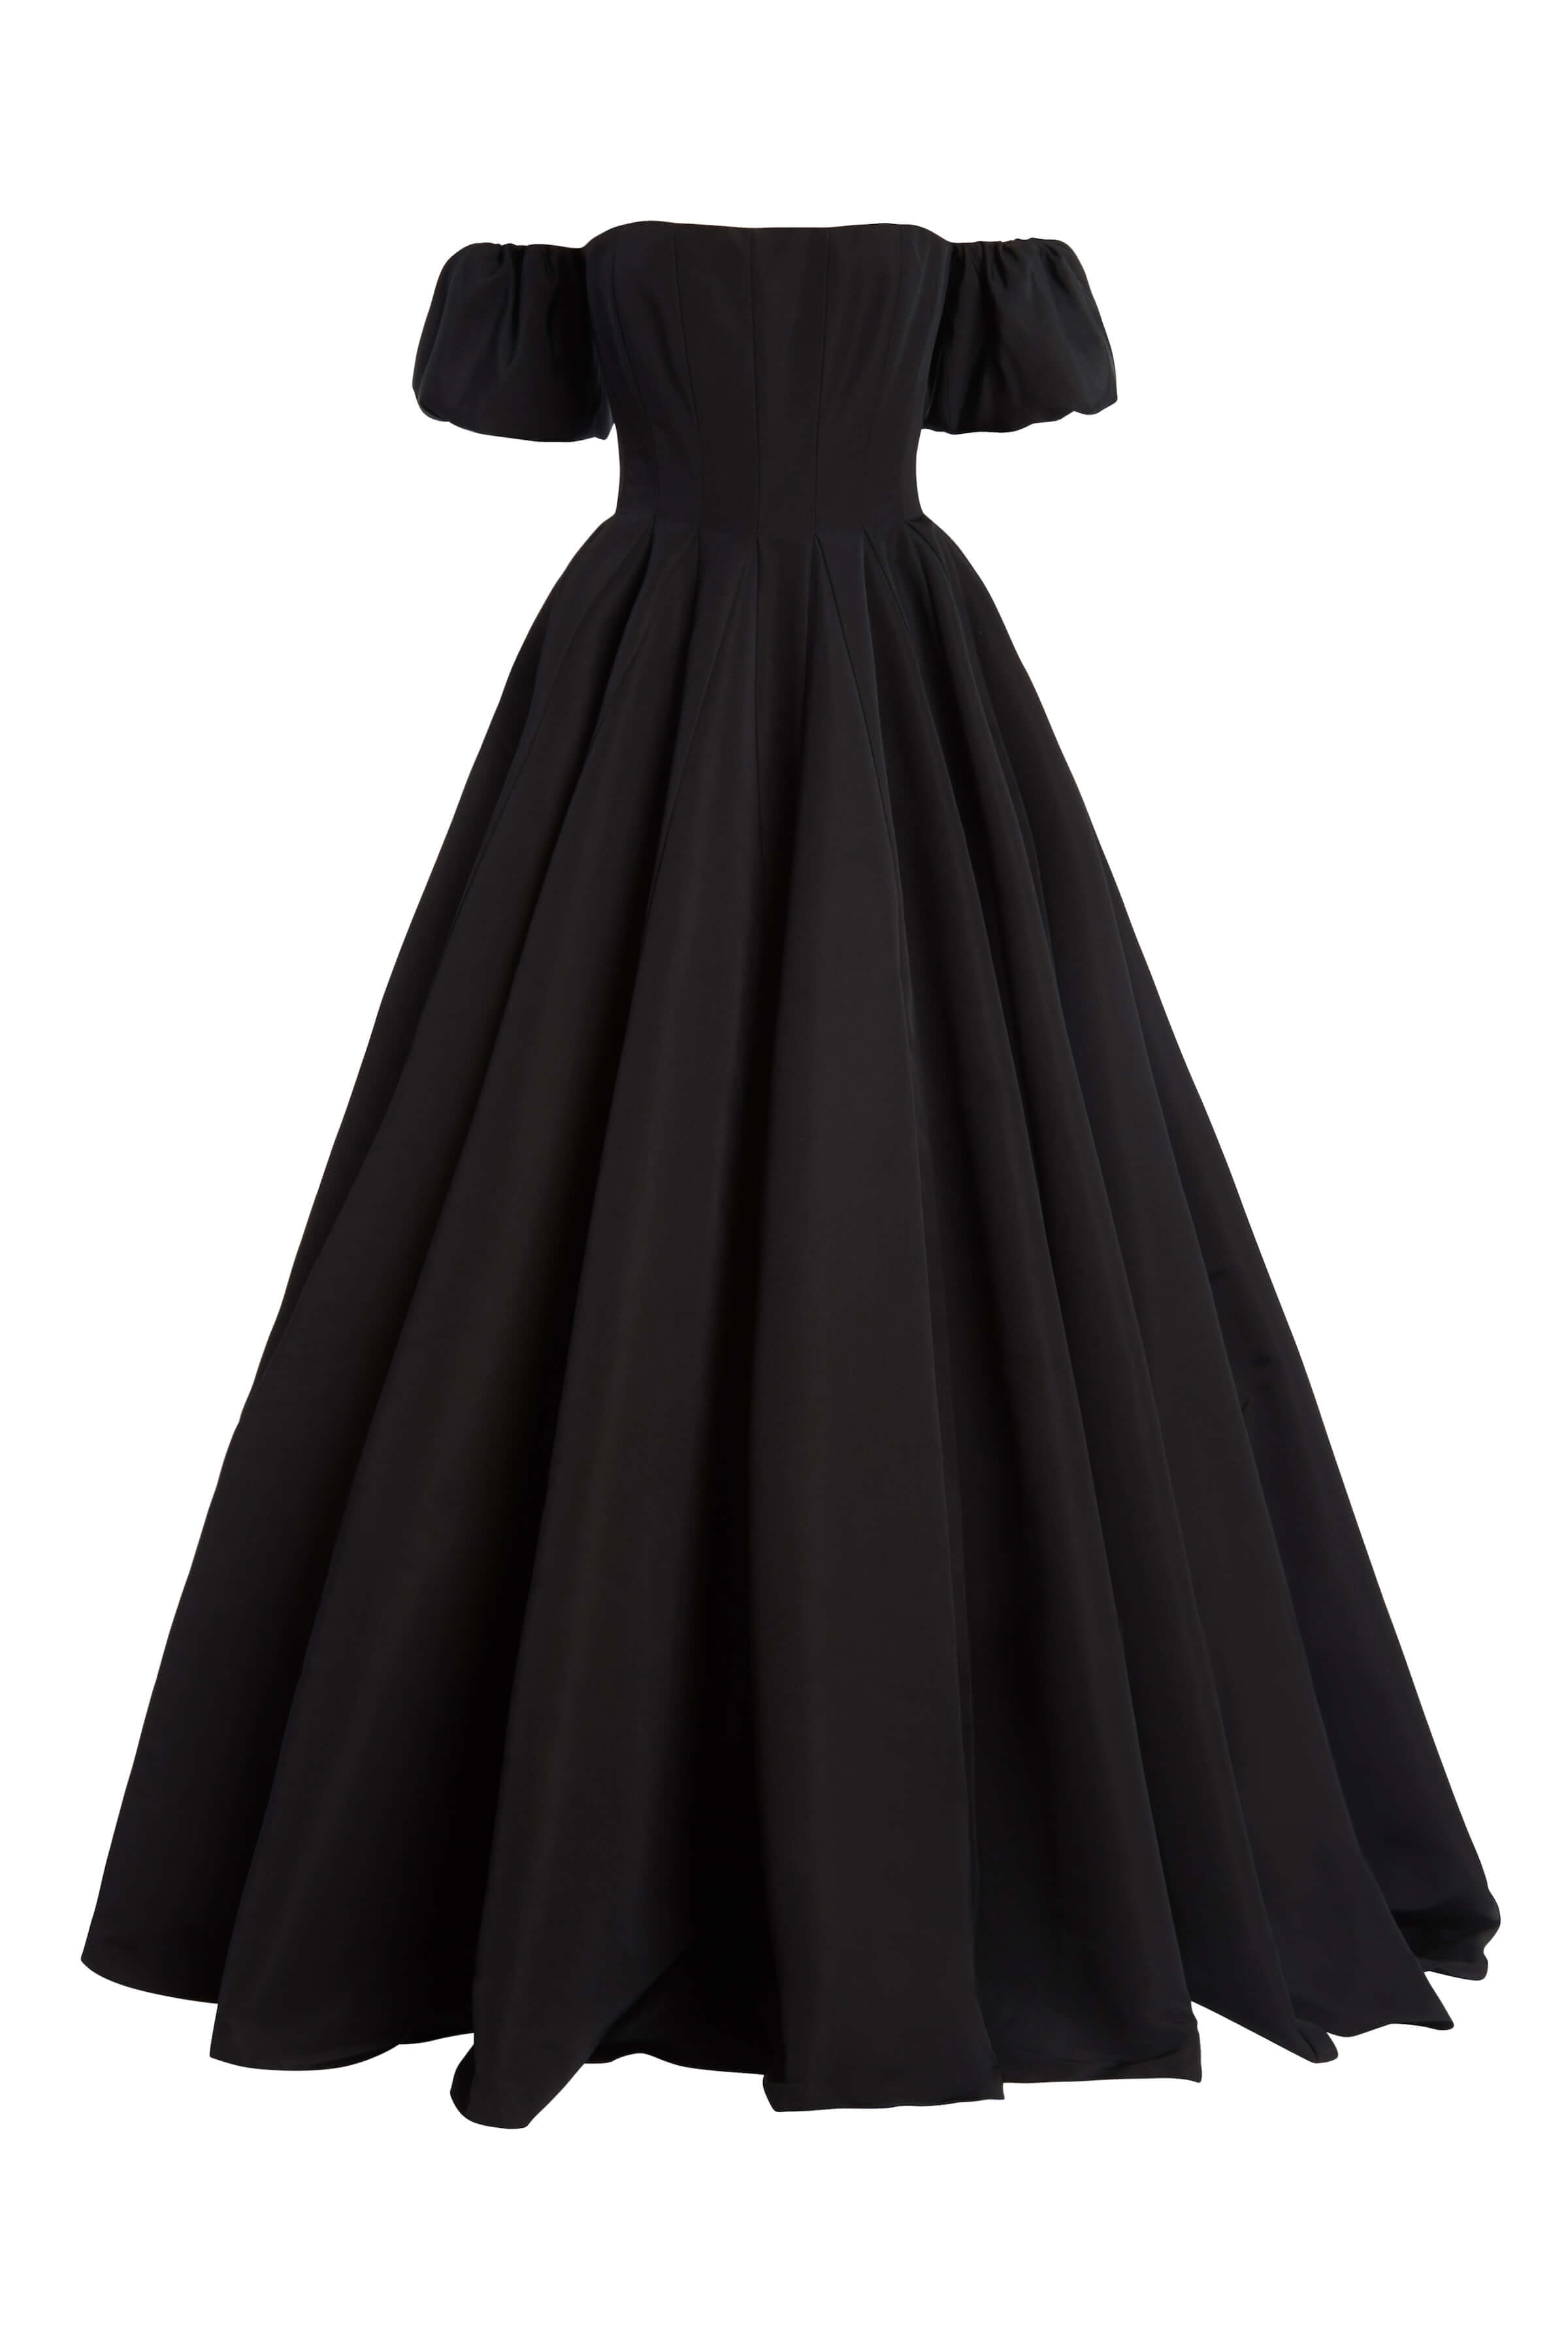 Black Evening Dresses | La Femme